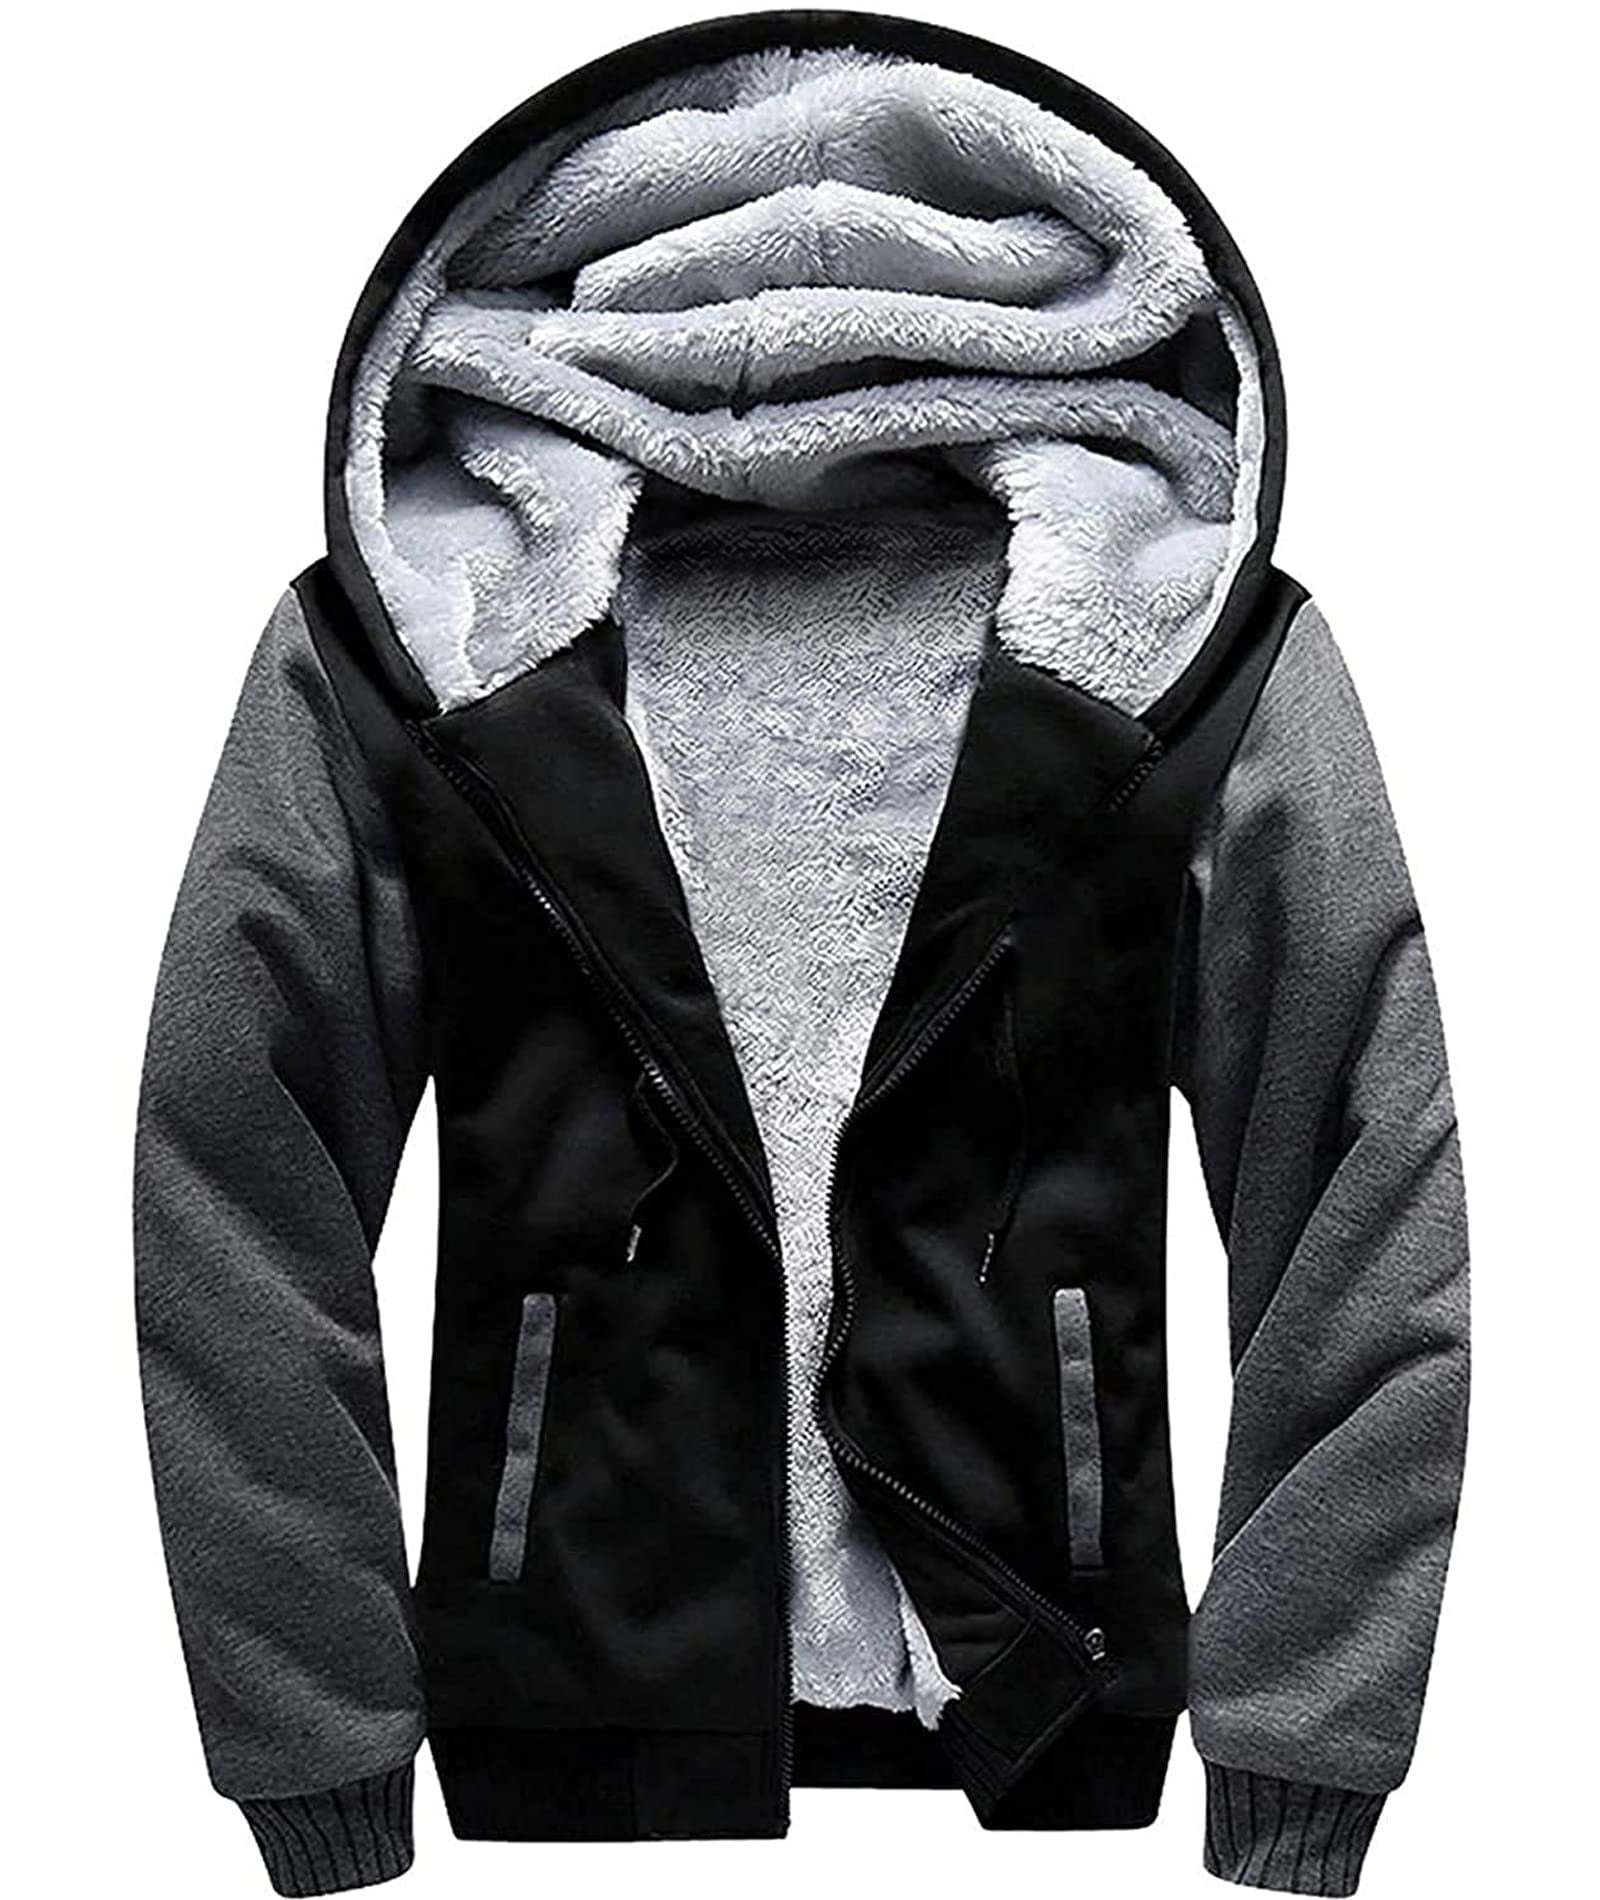 Send me Fly Fishing Fleece Sweatshirt for Men 2XL Dark Gray